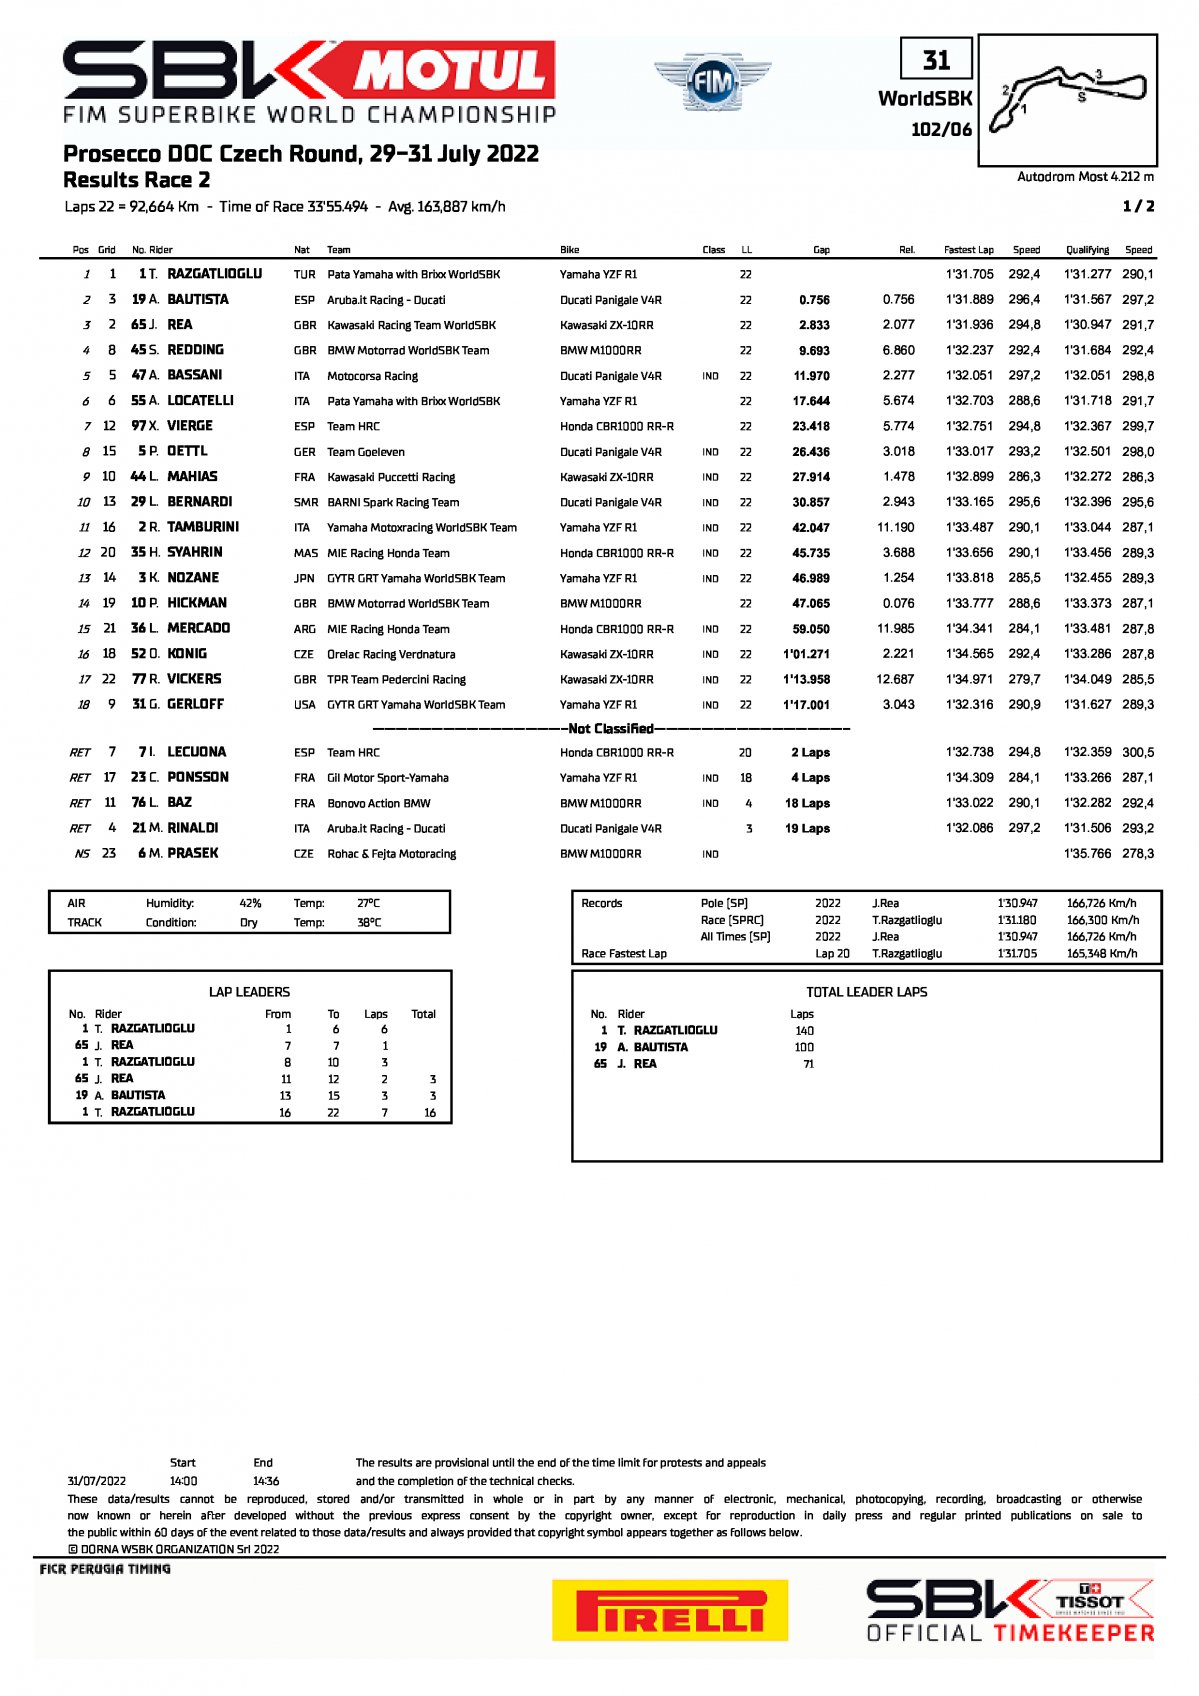 Результаты 2 гонки World Superbike, CzechWorldSBK (31/07/2022)